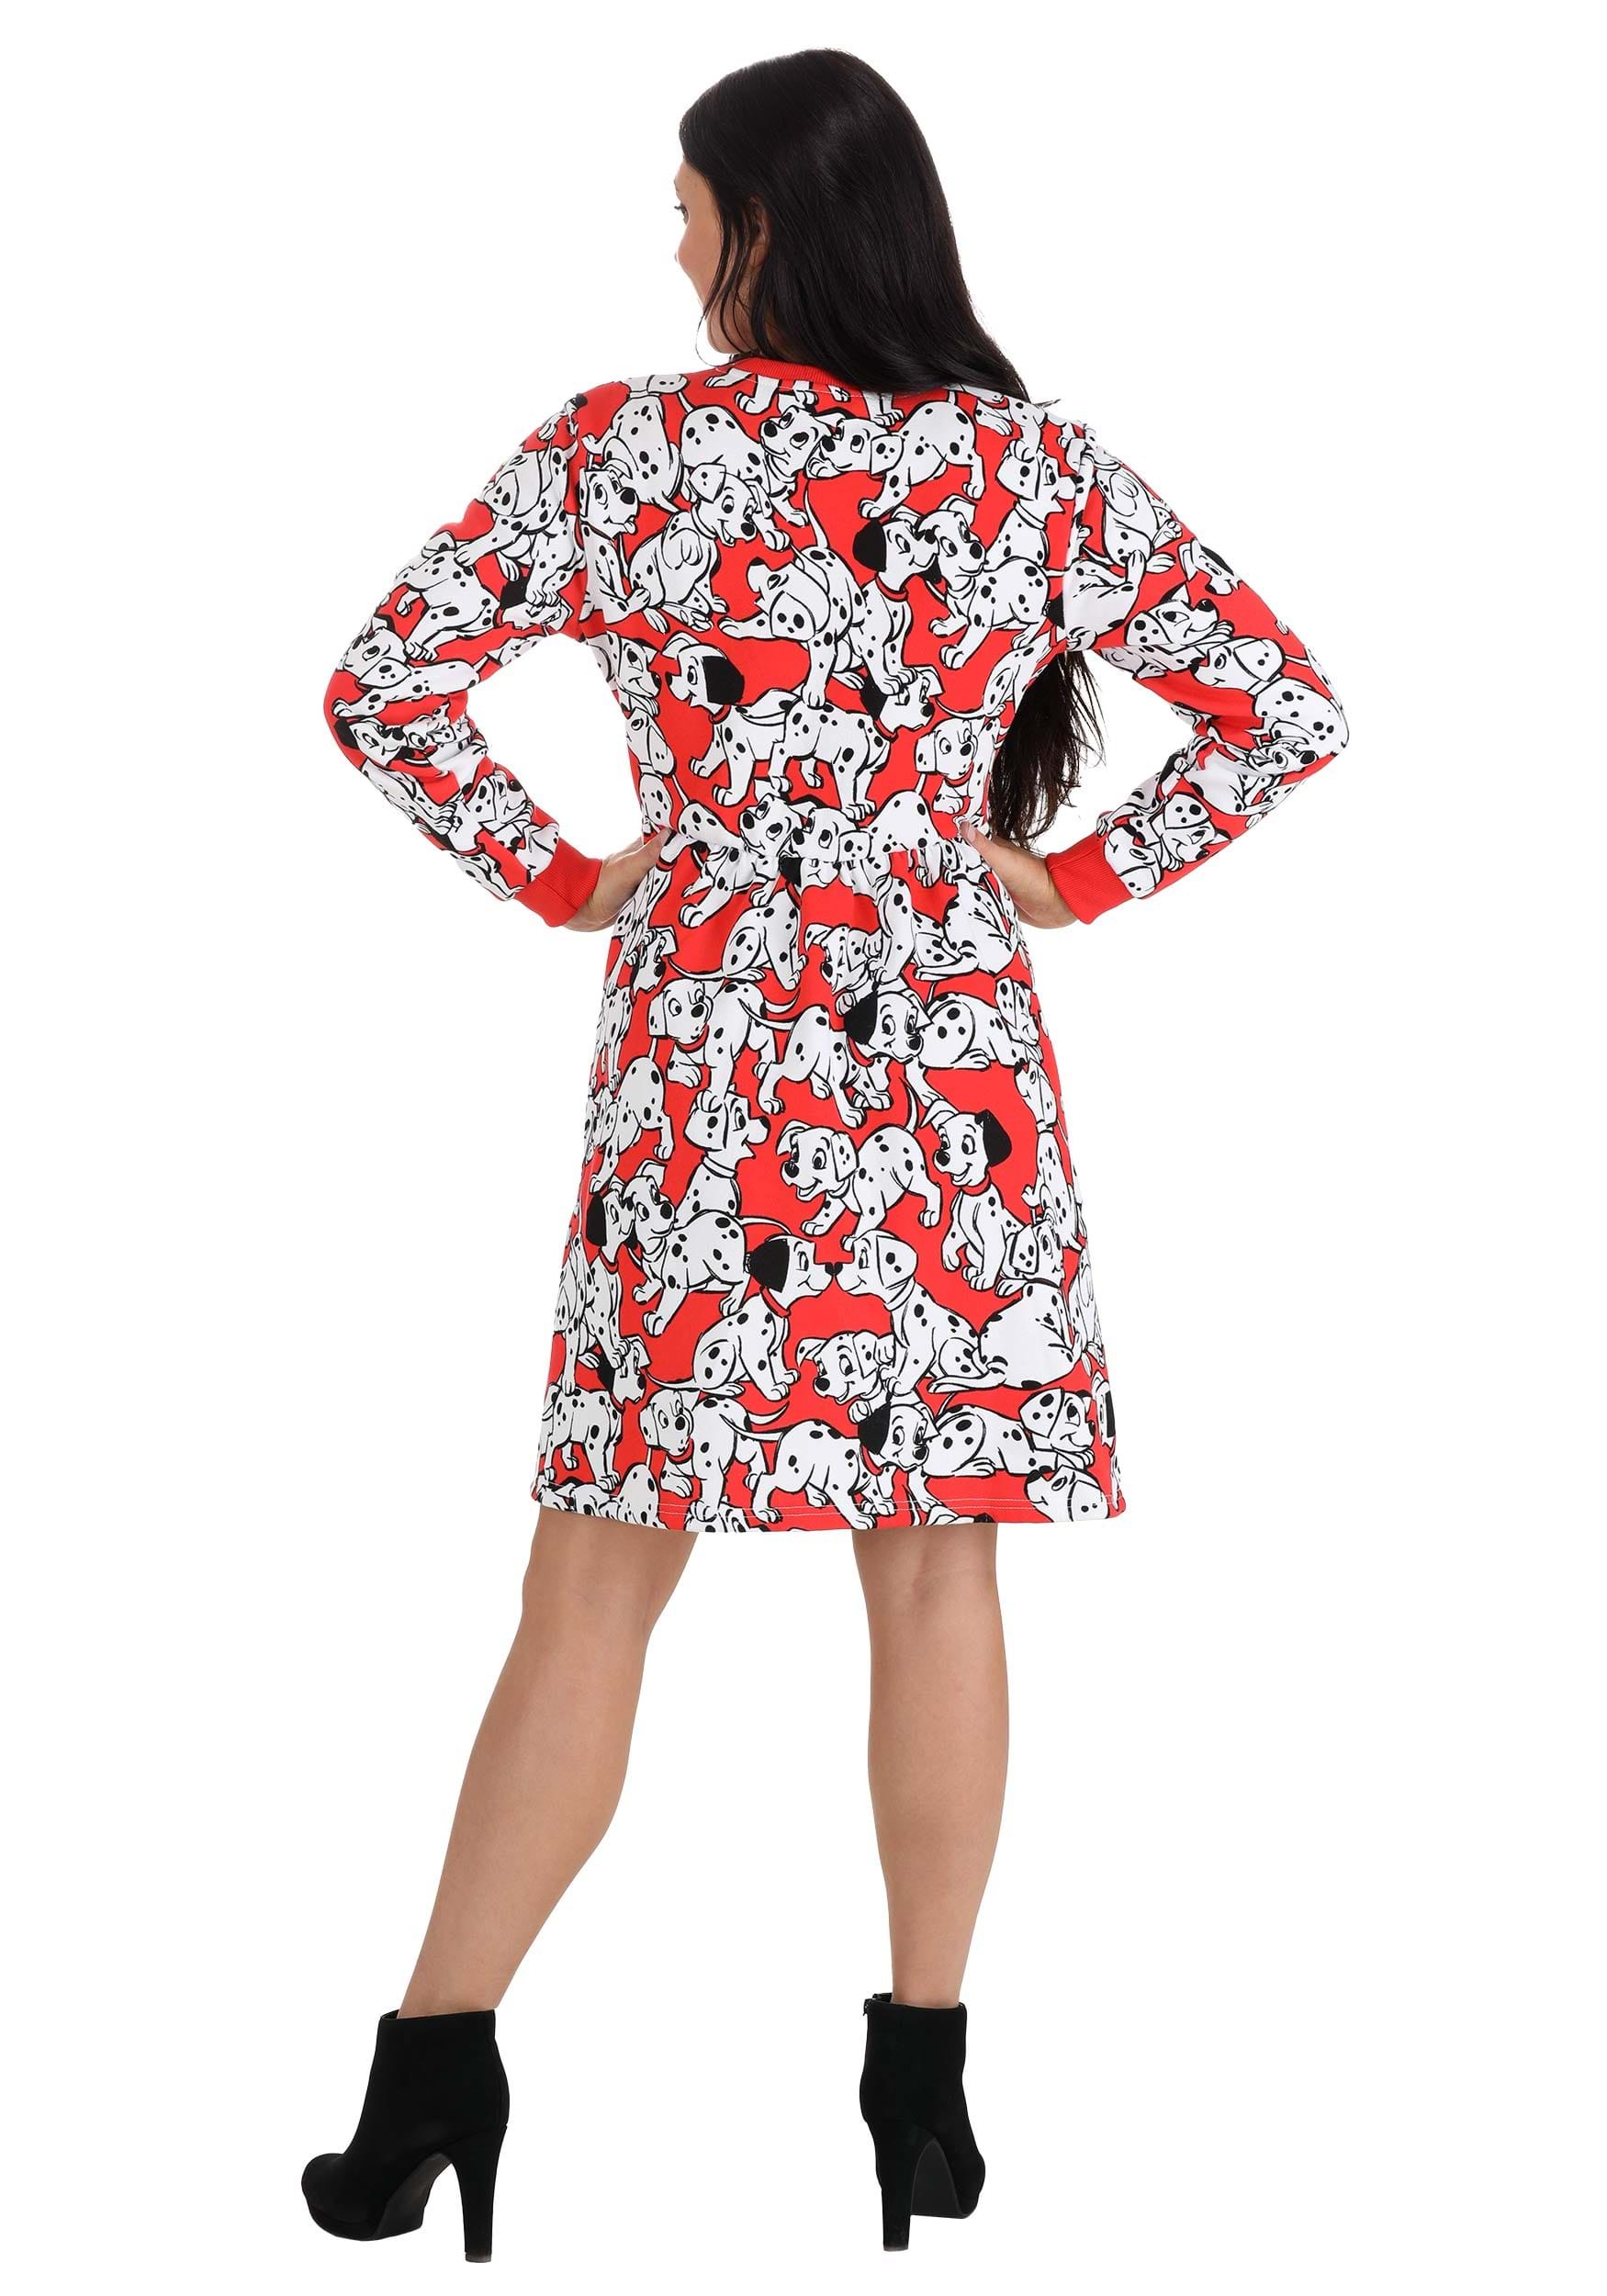 Cakeworthy 101 Dalmatians Sweater Dress For Women